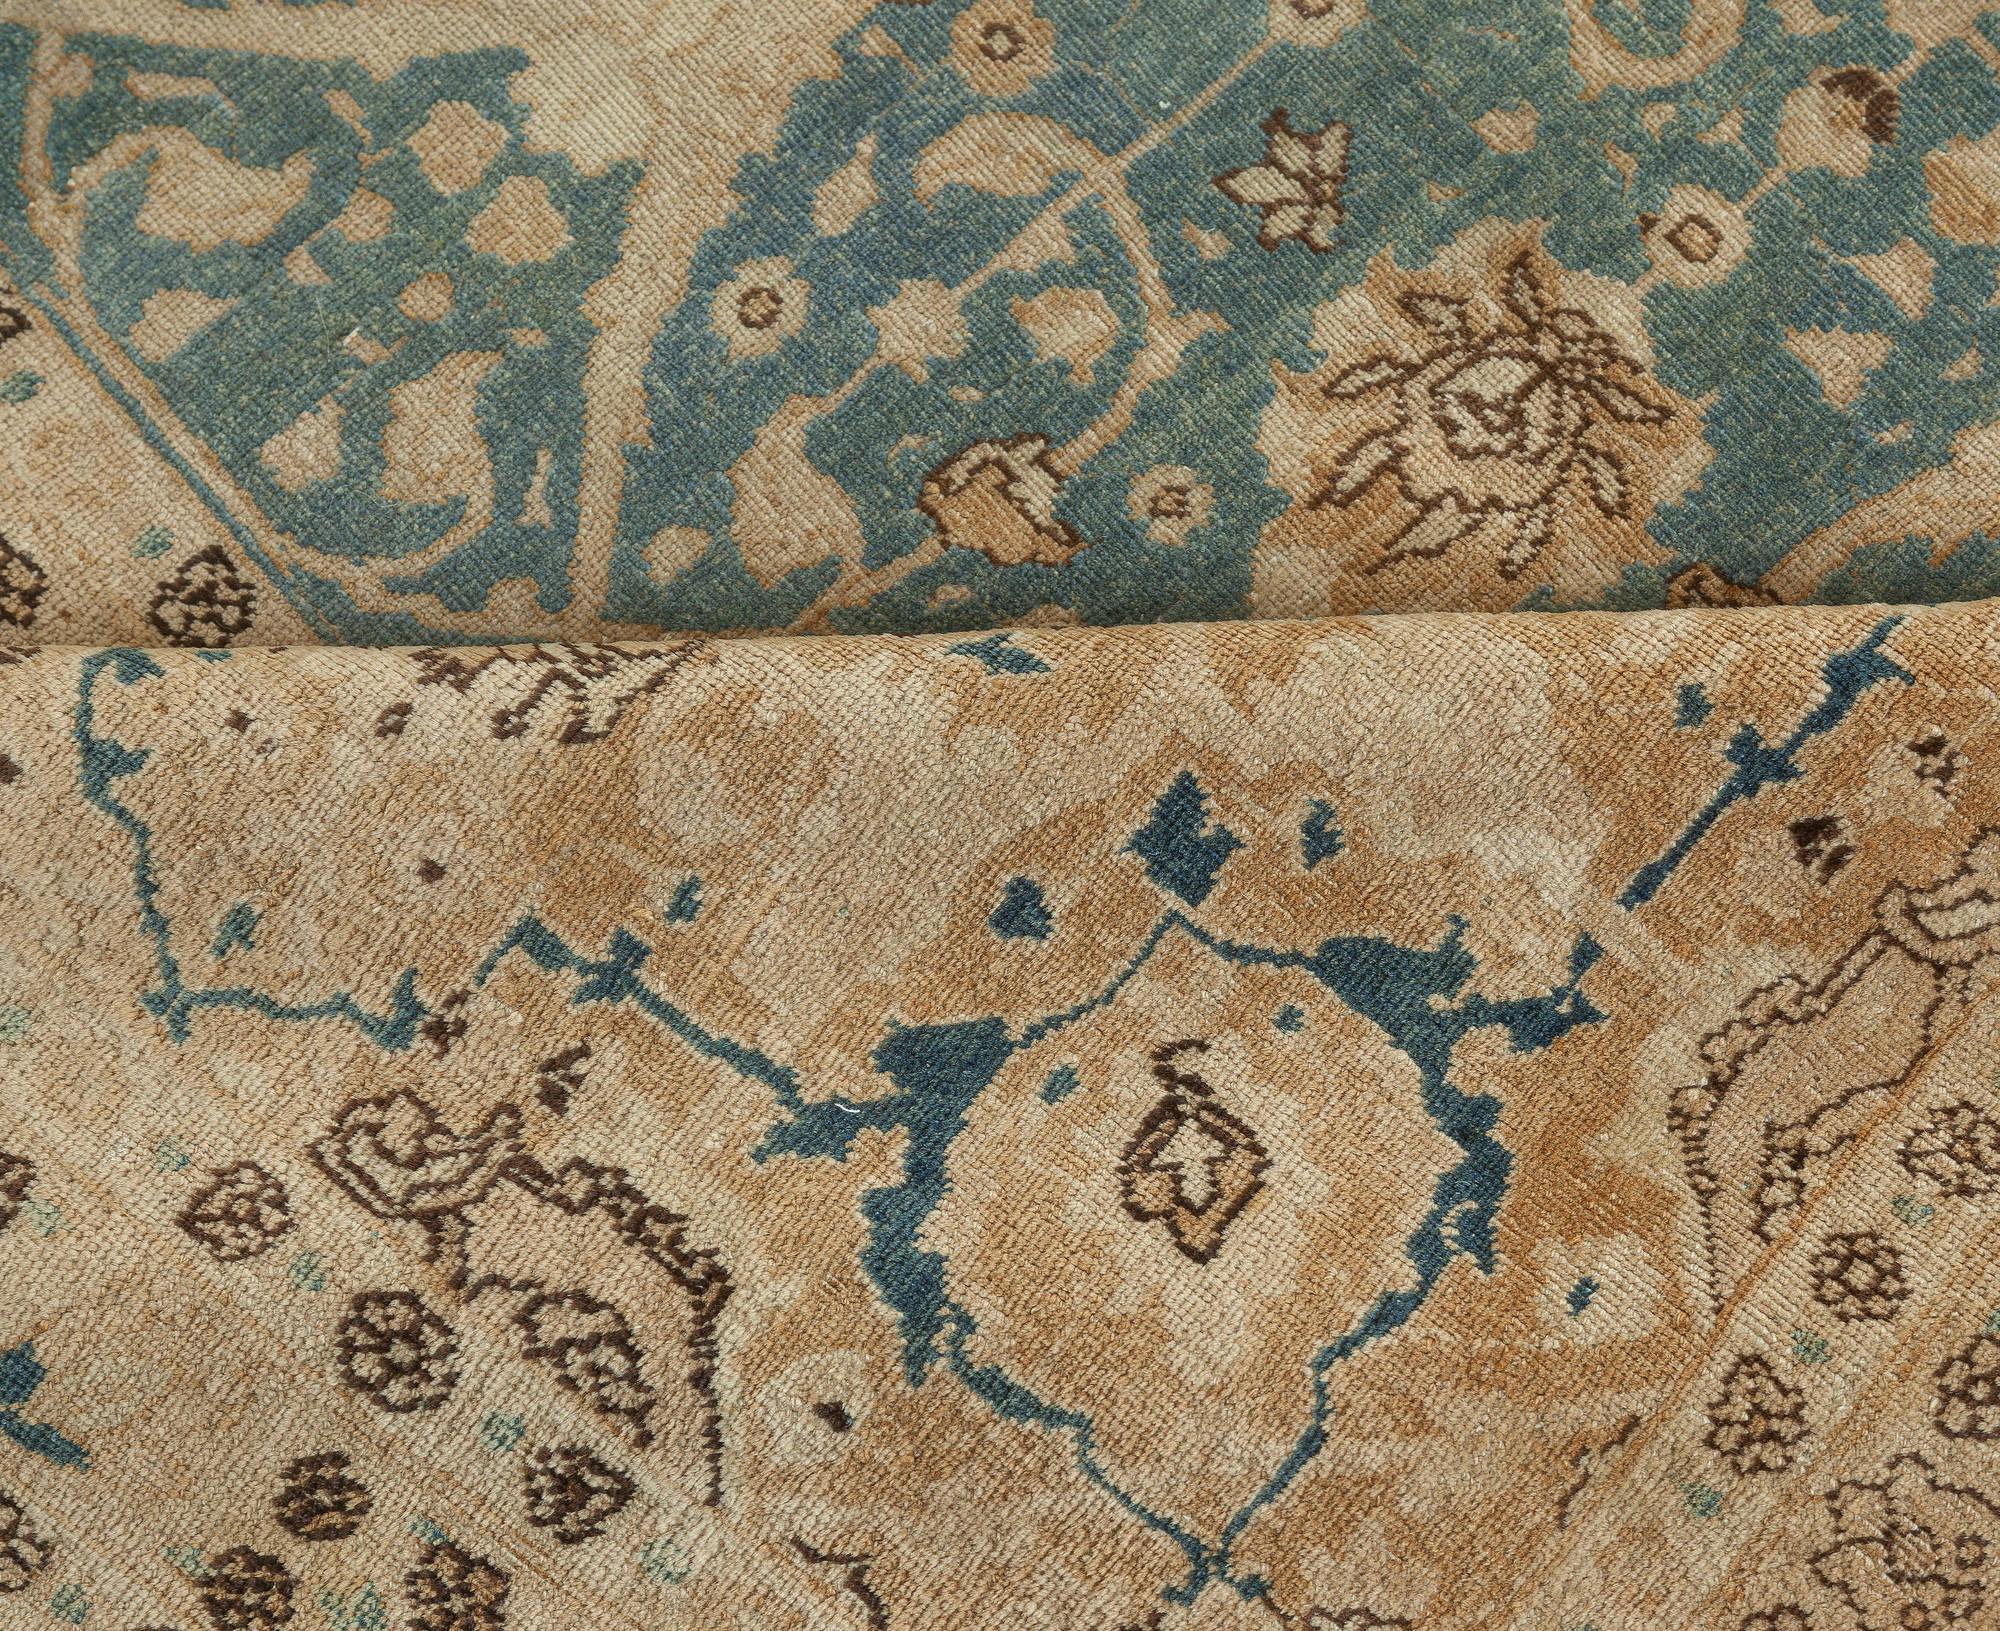 Antique Persian Tabriz handmade wool carpet.
Size: 11'2